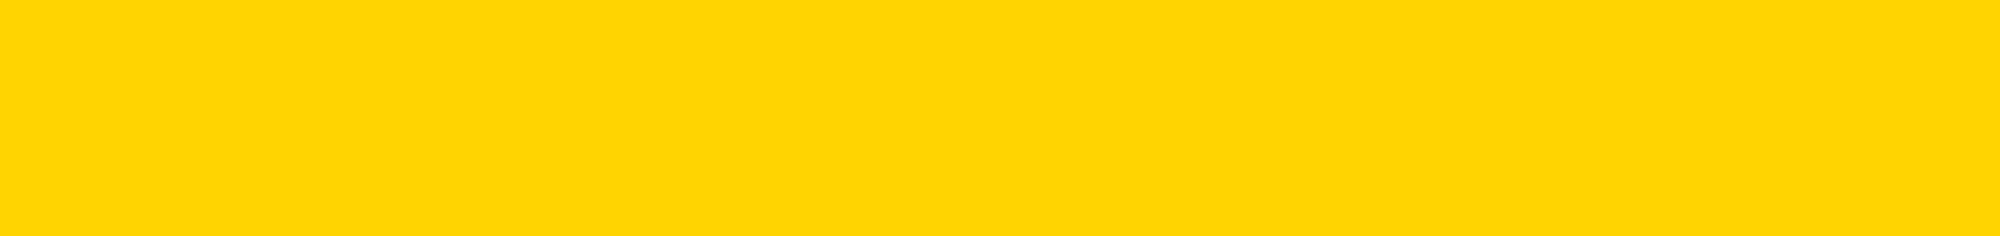 Devold_yellow-1